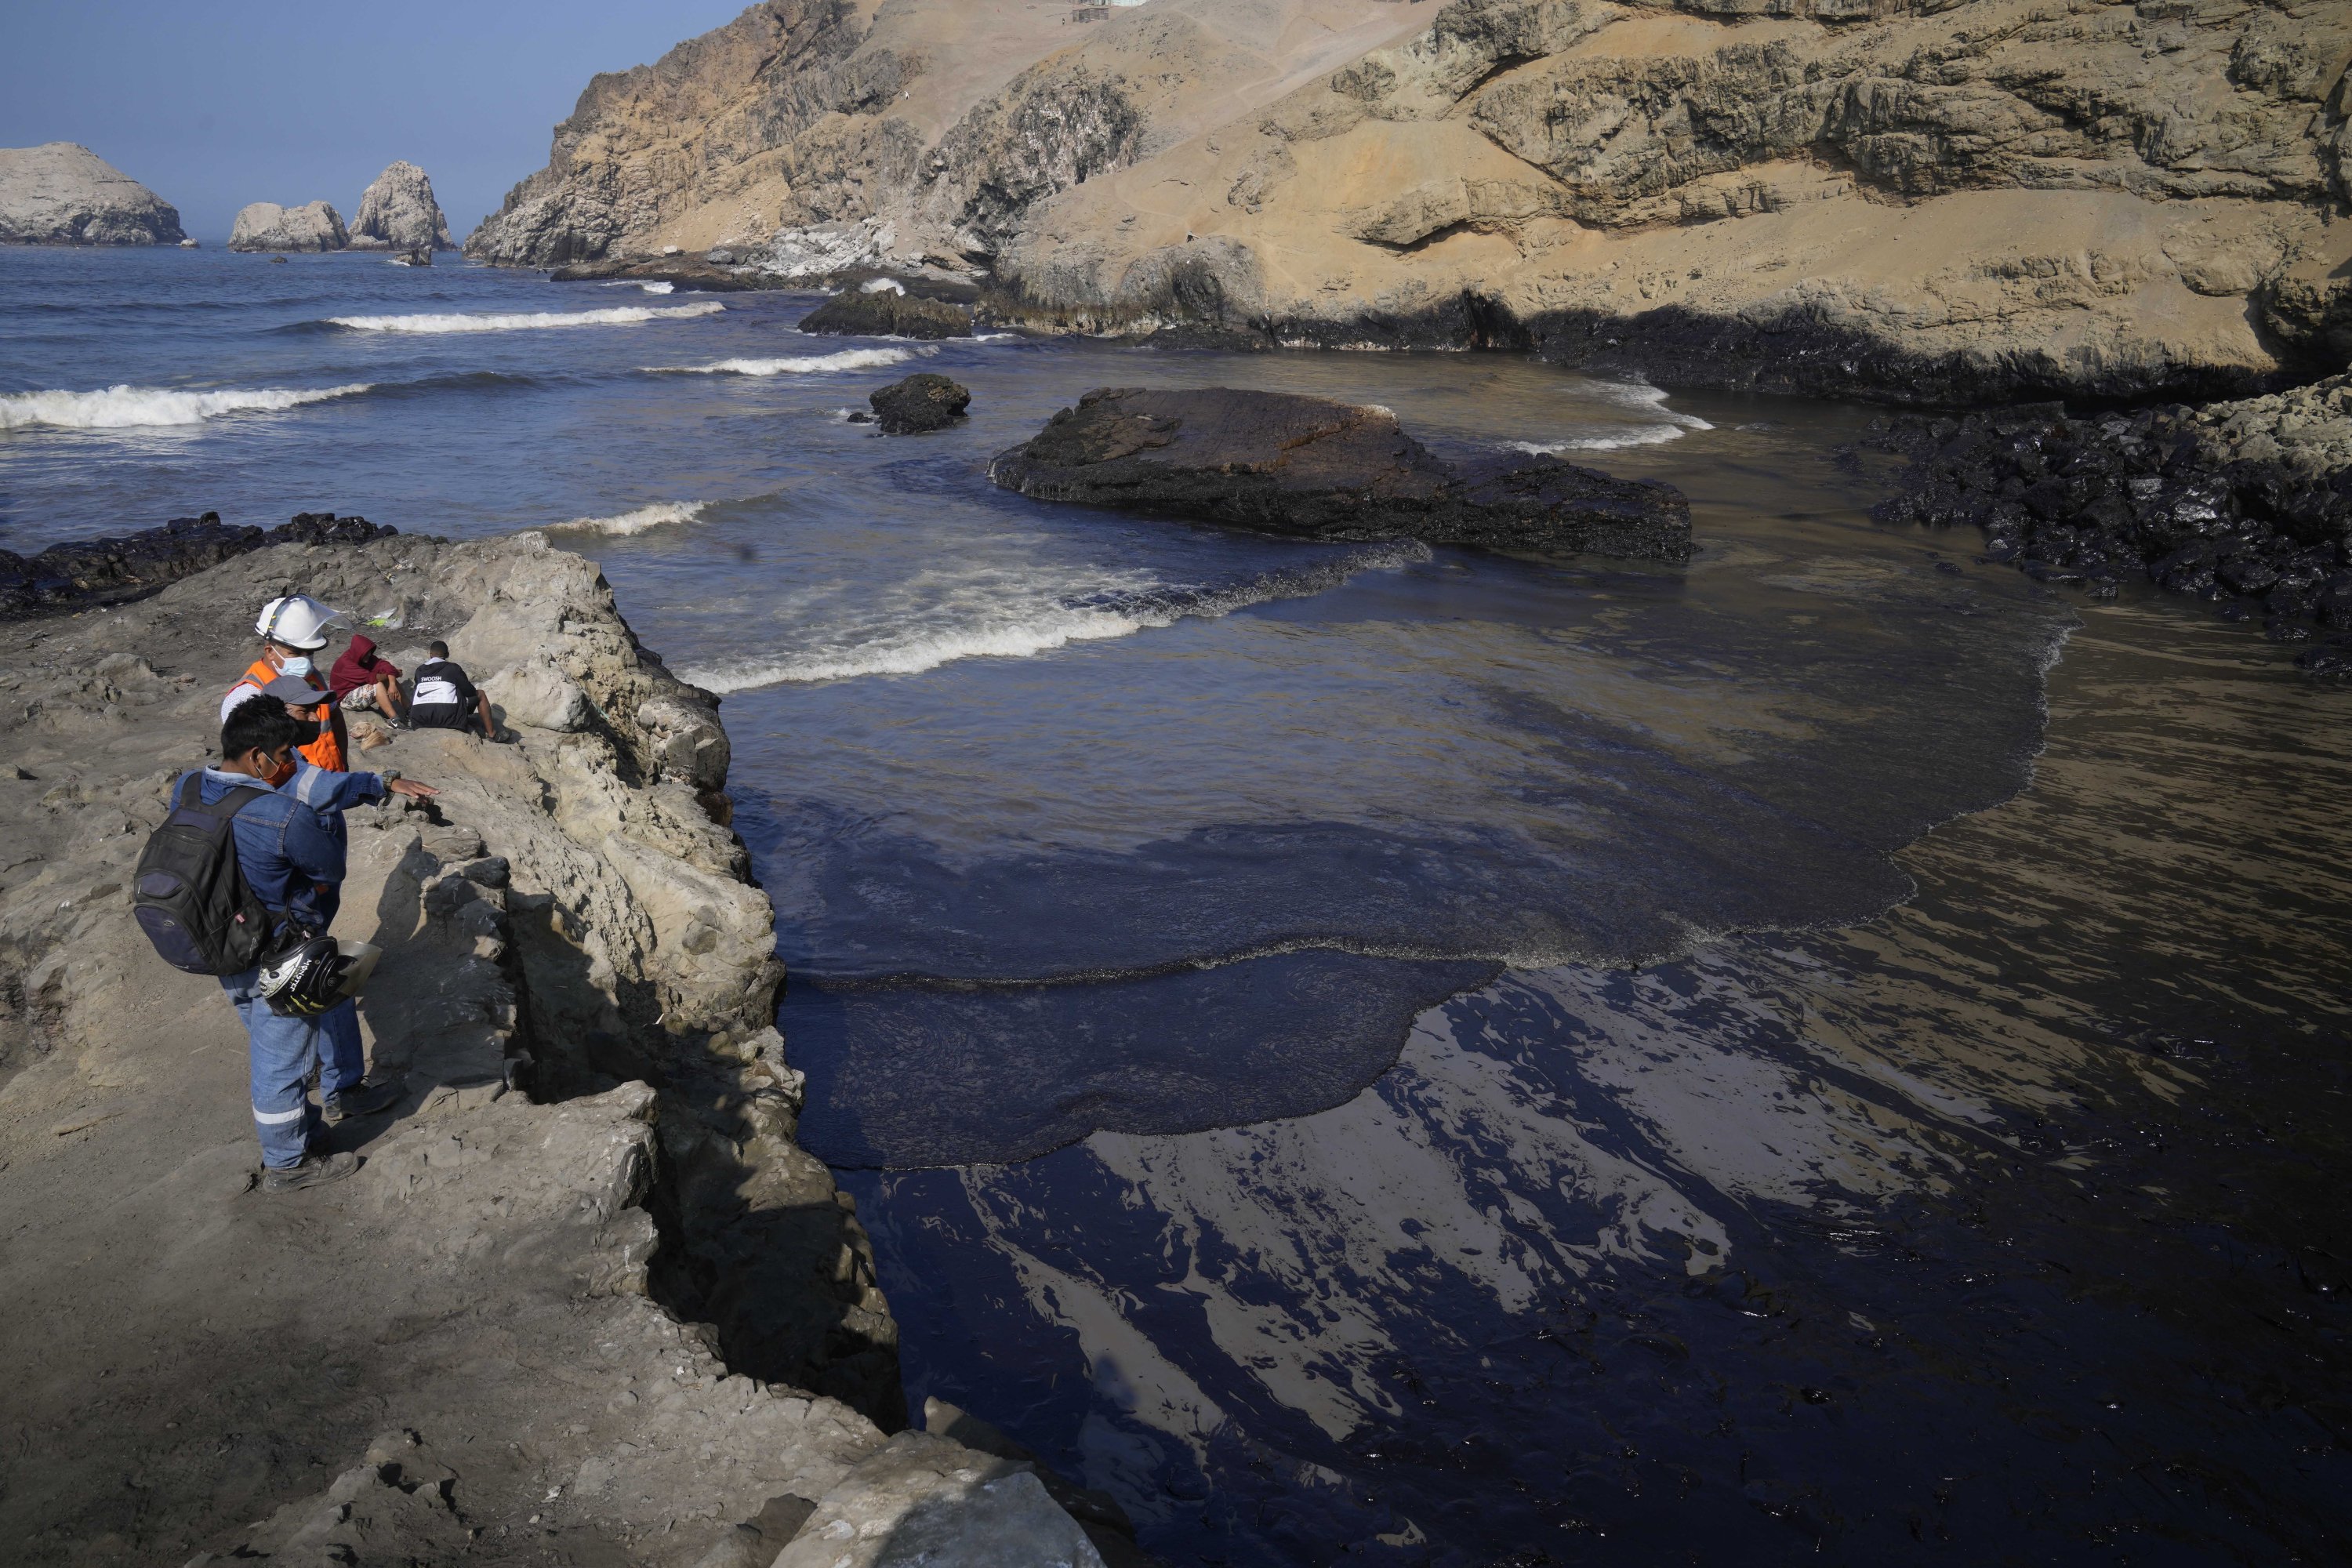 Pekerja melihat minyak di perairan Pantai Cavero setelah gelombang tinggi yang disebabkan oleh letusan gunung berapi bawah laut di Tonga menyebabkan tumpahan minyak di Ventanilla, Callao, Peru, Selasa, 18 Januari 2022. (AP Photo)